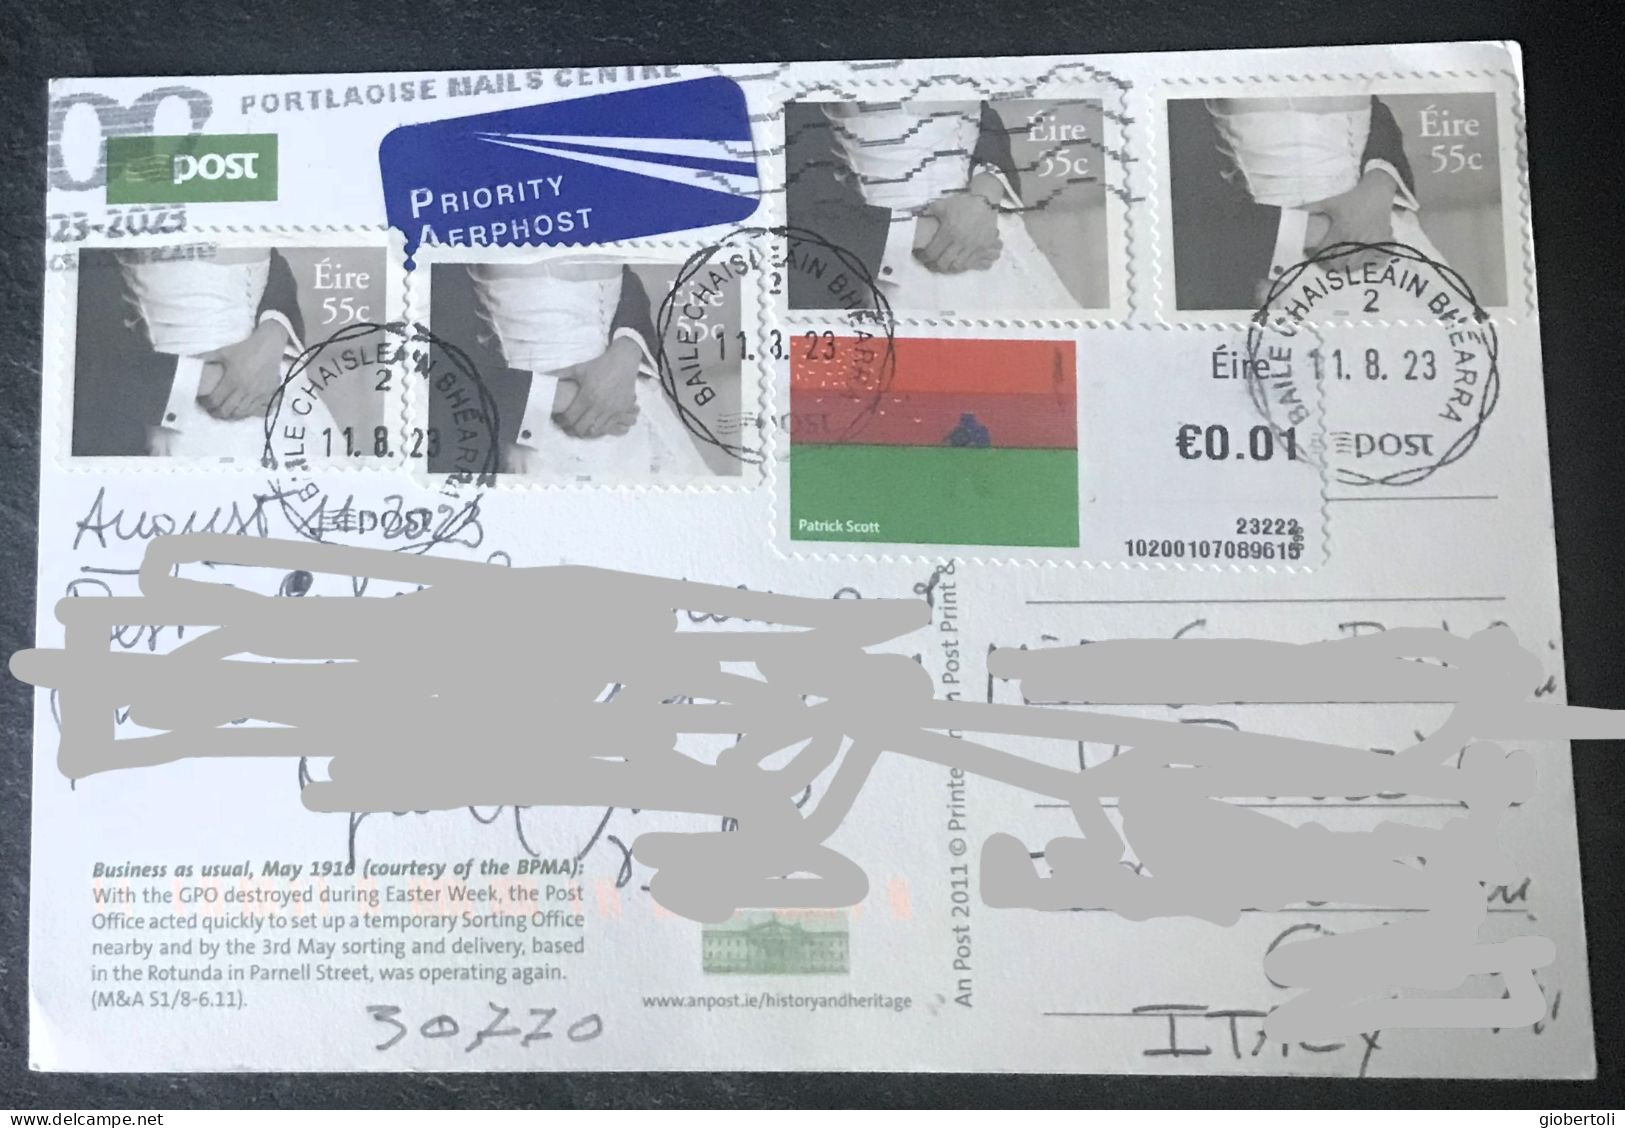 Irlanda/Ireland/Irlande: Cartolina, Postcard - Covers & Documents